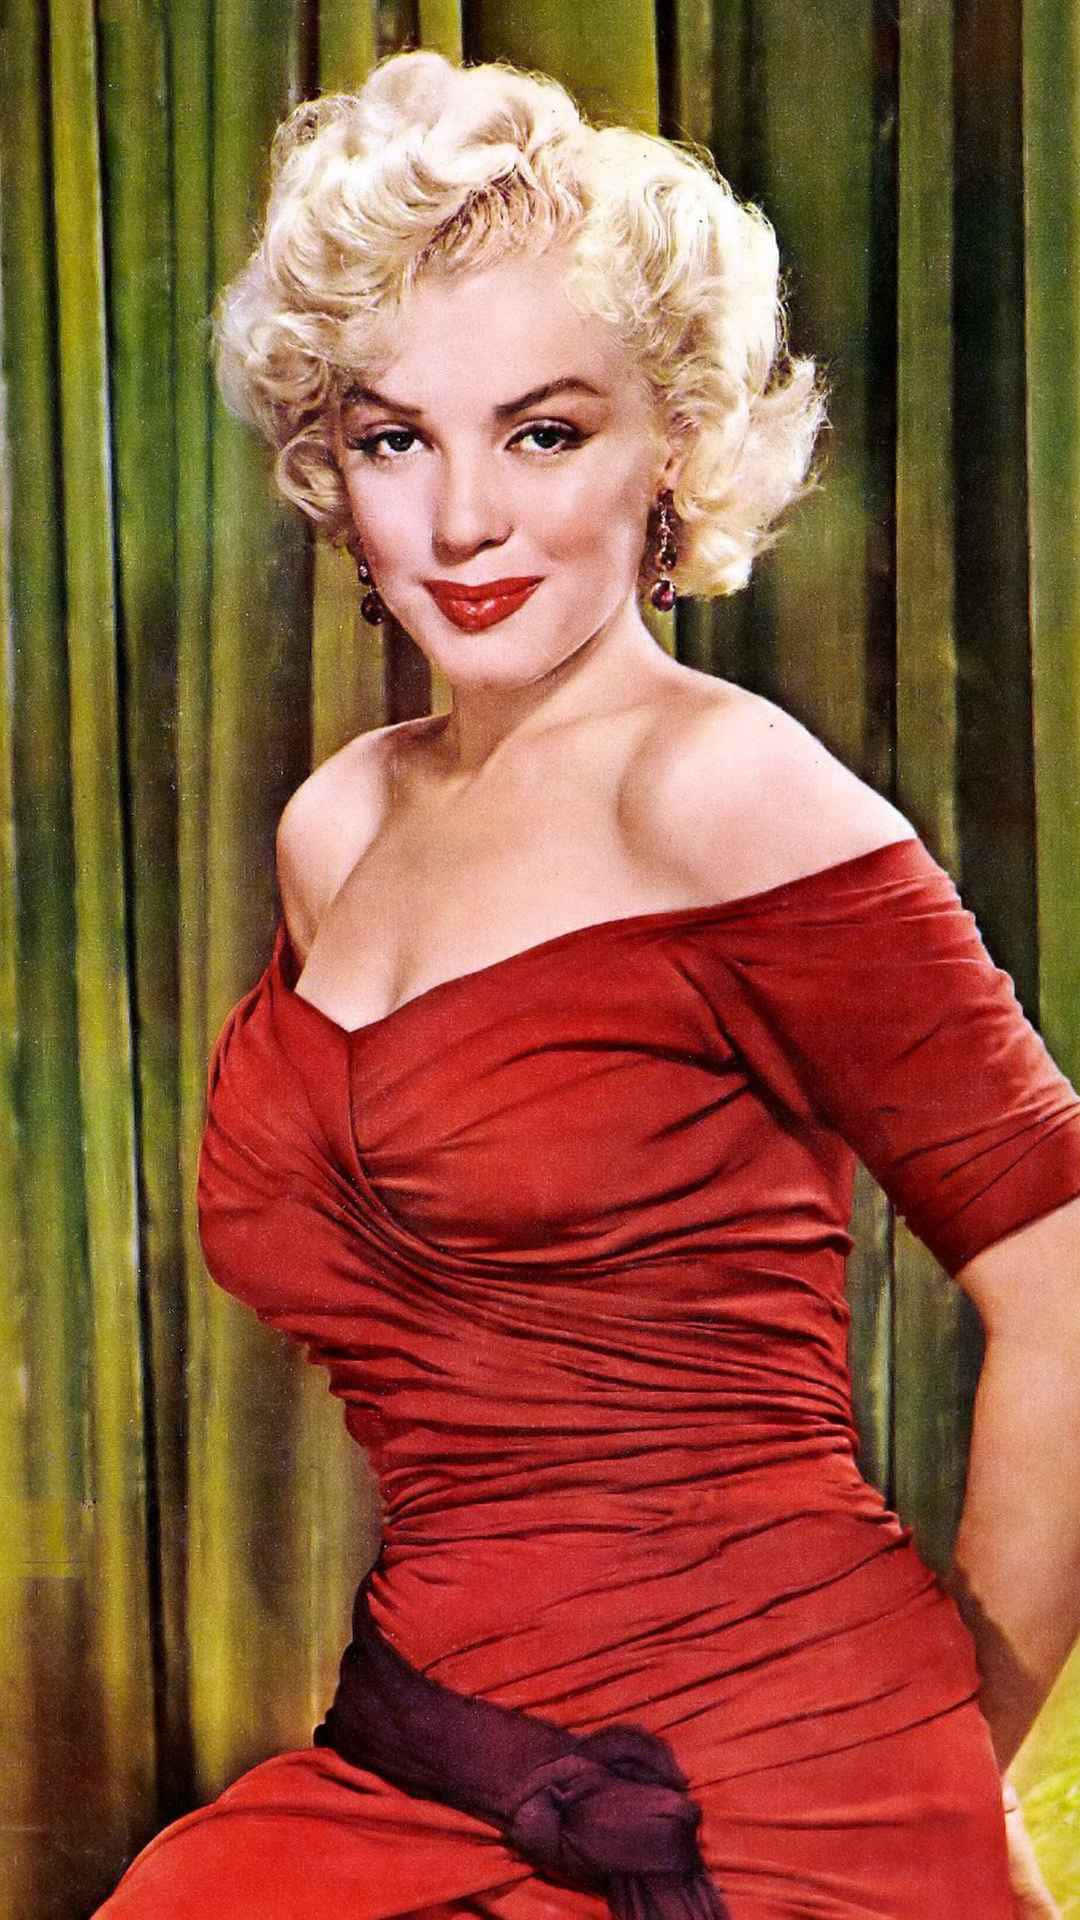 Nyd superstjerne-stilen med Marilyn Monroe Iphone wallpaper. Wallpaper